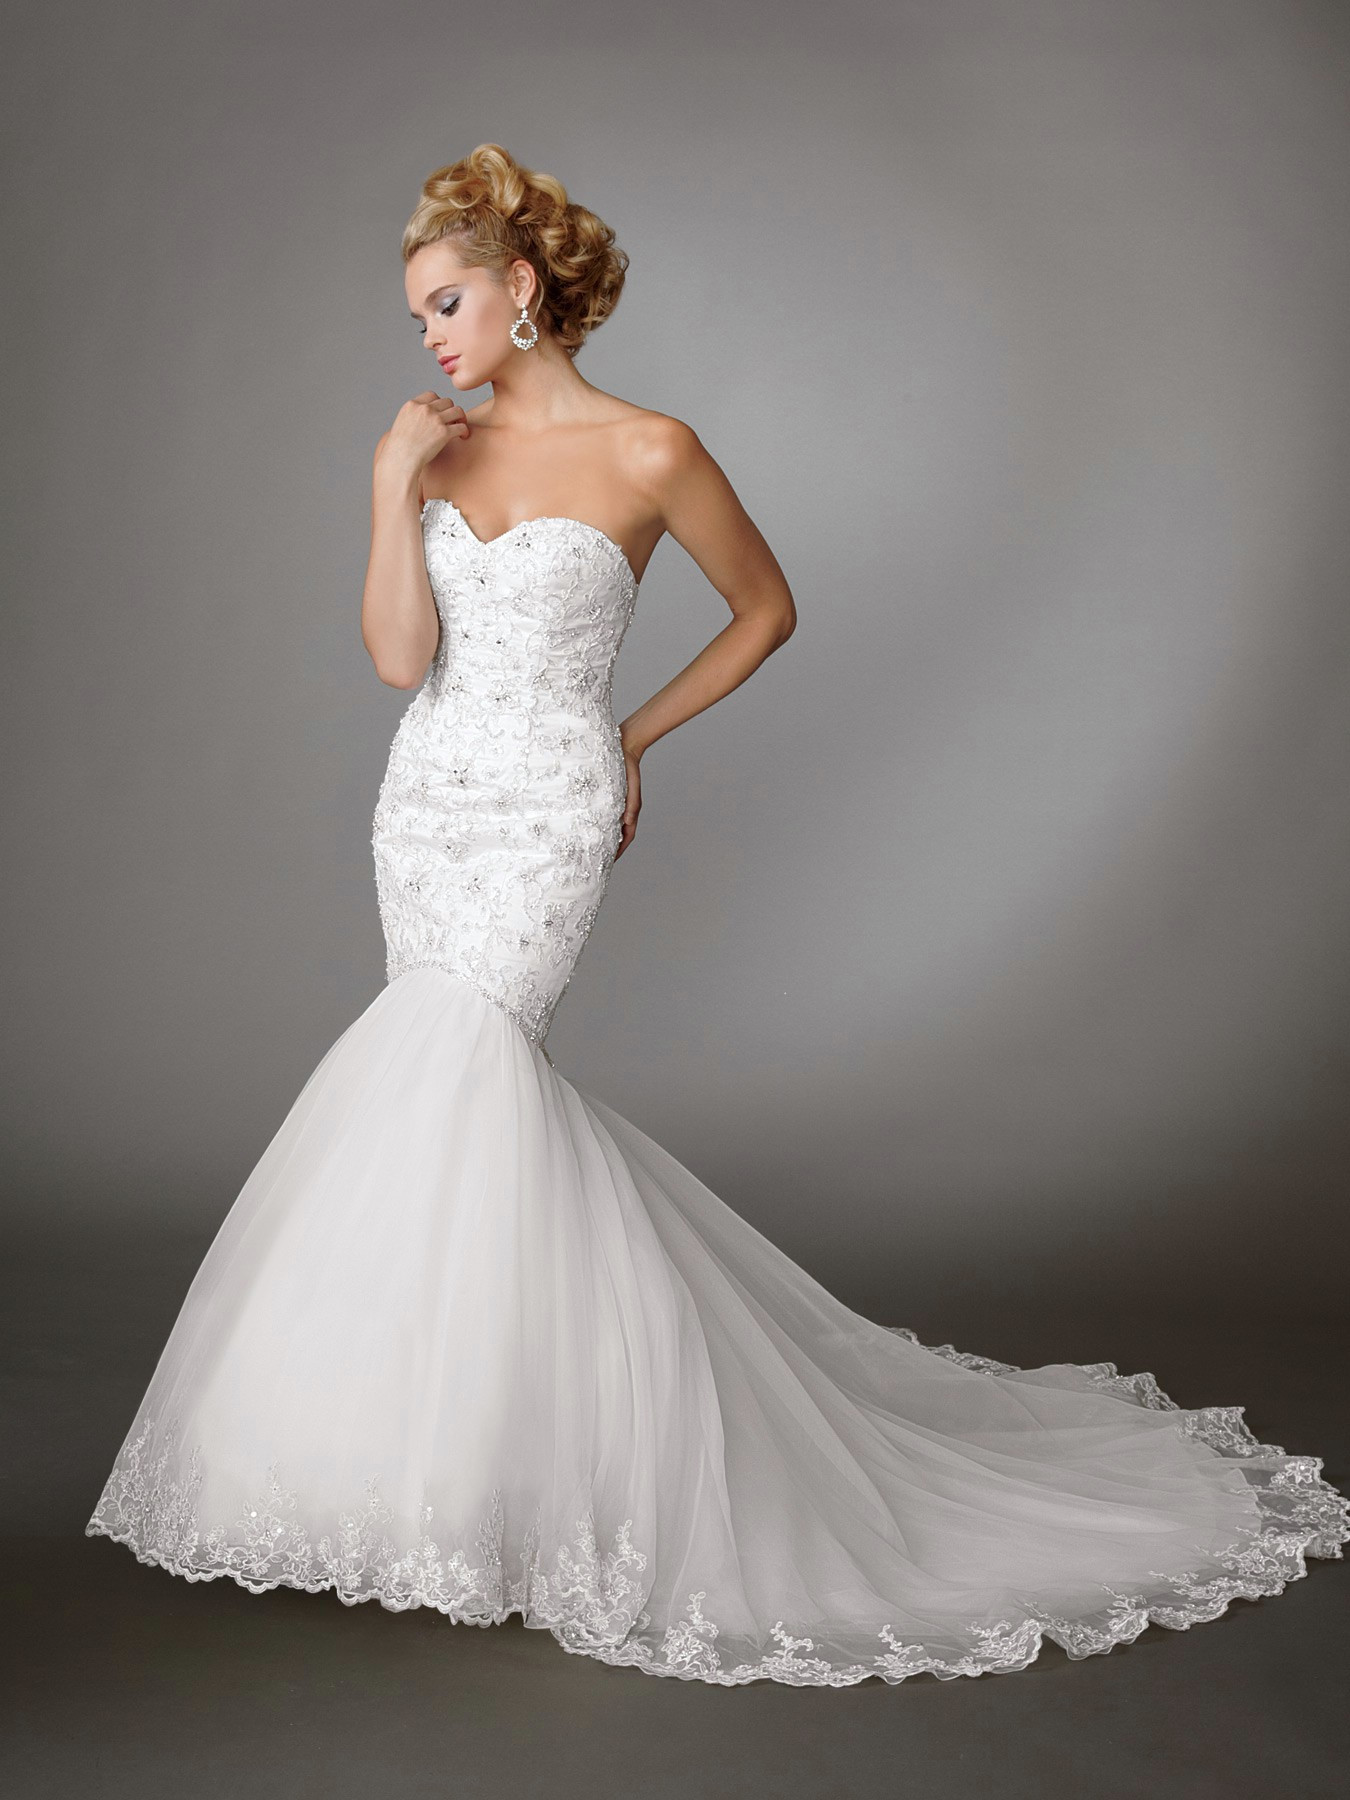 Mermaid Gown Wedding
 Mermaid Wedding Dresses – An Elegant Choice For Brides – The WoW Style